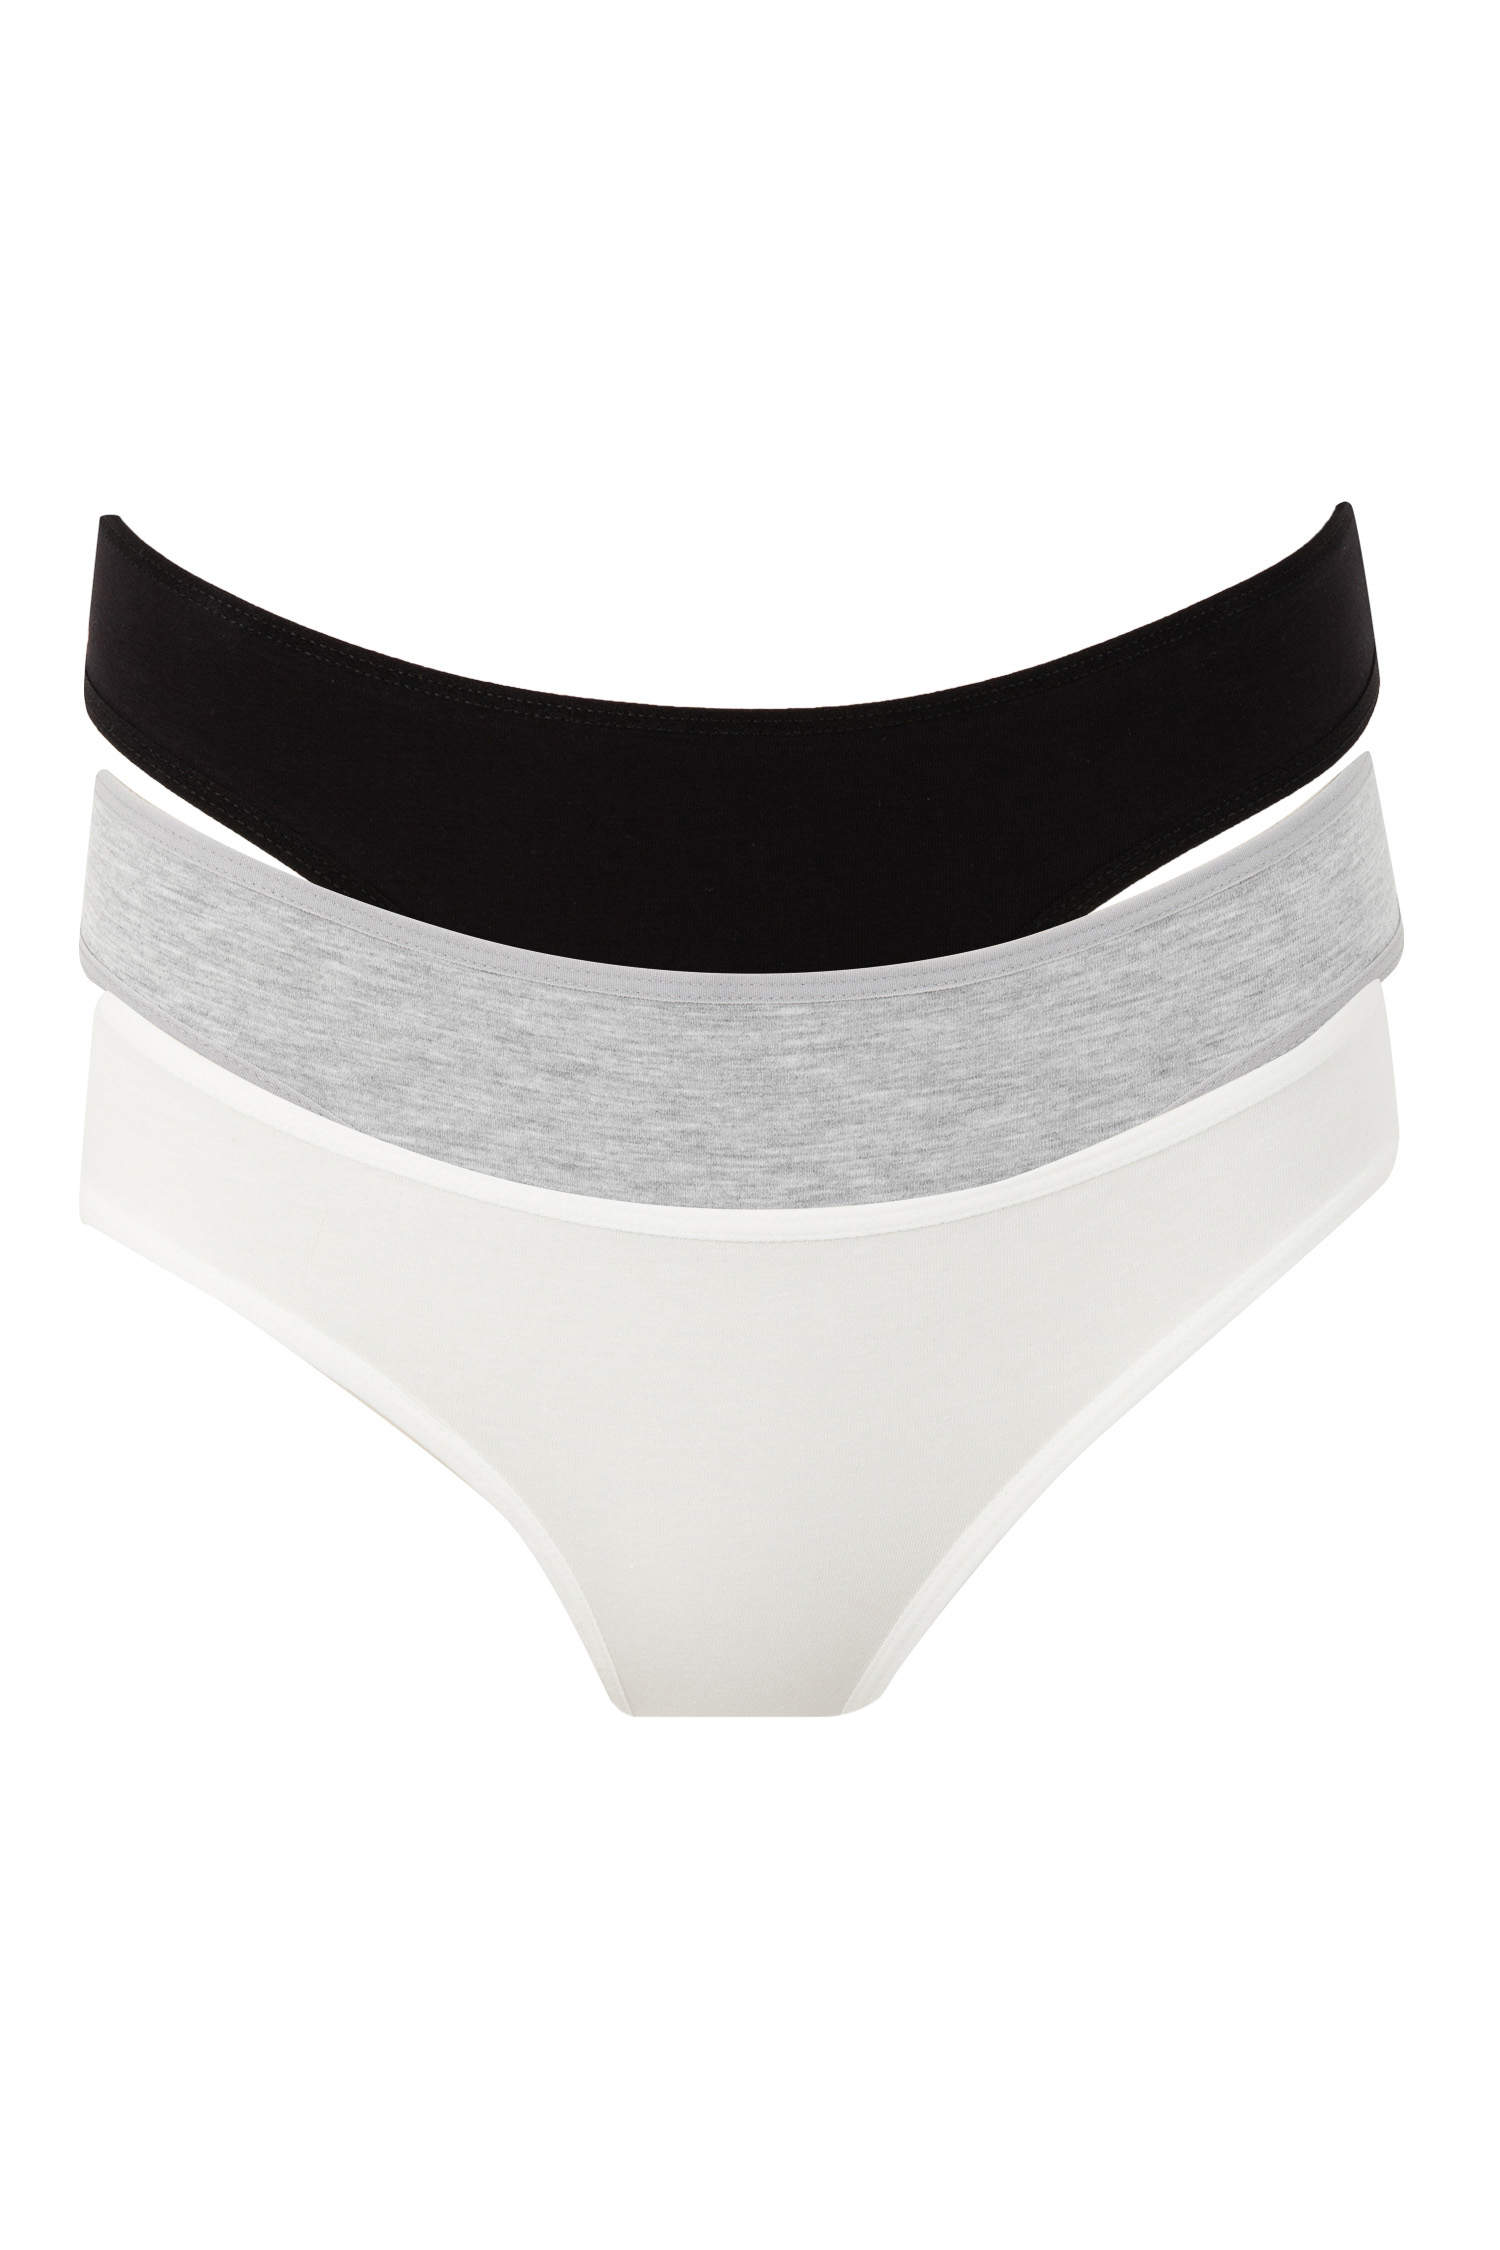 Grey WOMAN Cotton 2679628 Basic In Panties 3-pack | Love Brazilian DeFacto Fall